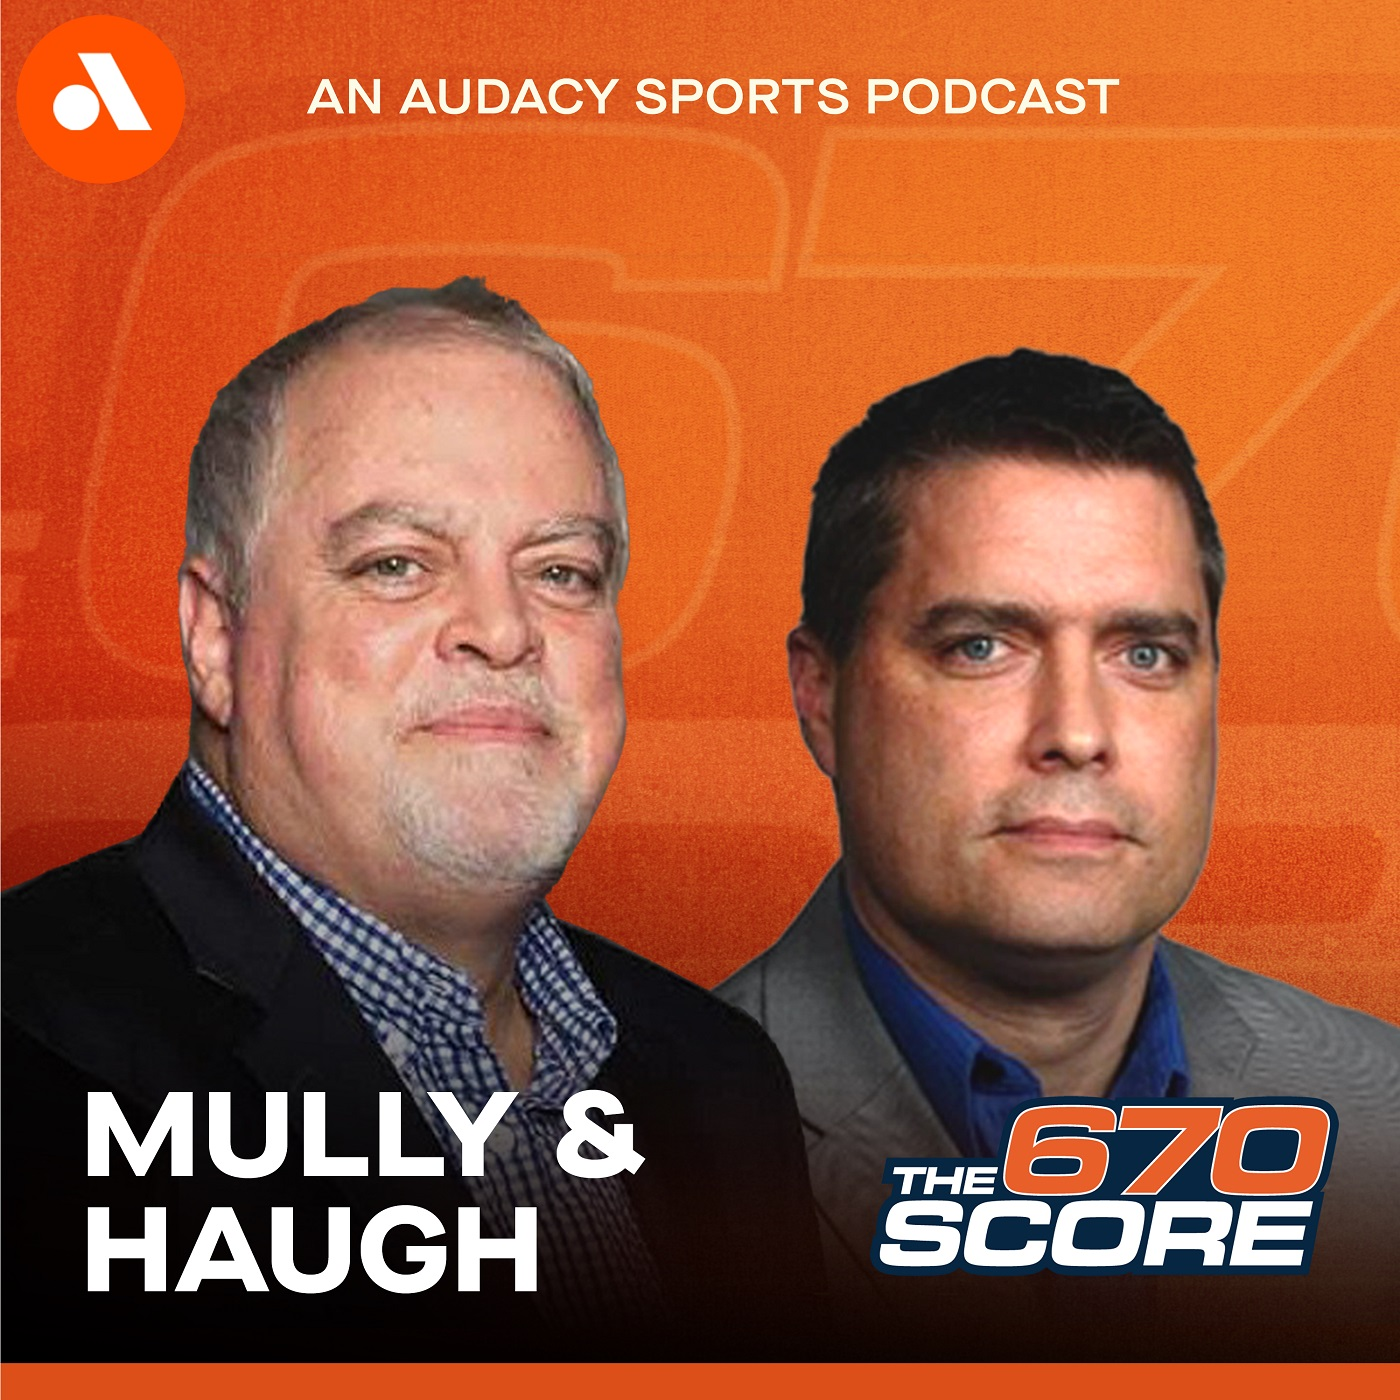 Mully & Haugh: Michael Lombardi & Joe Ostrowski interviews (Hour 3)